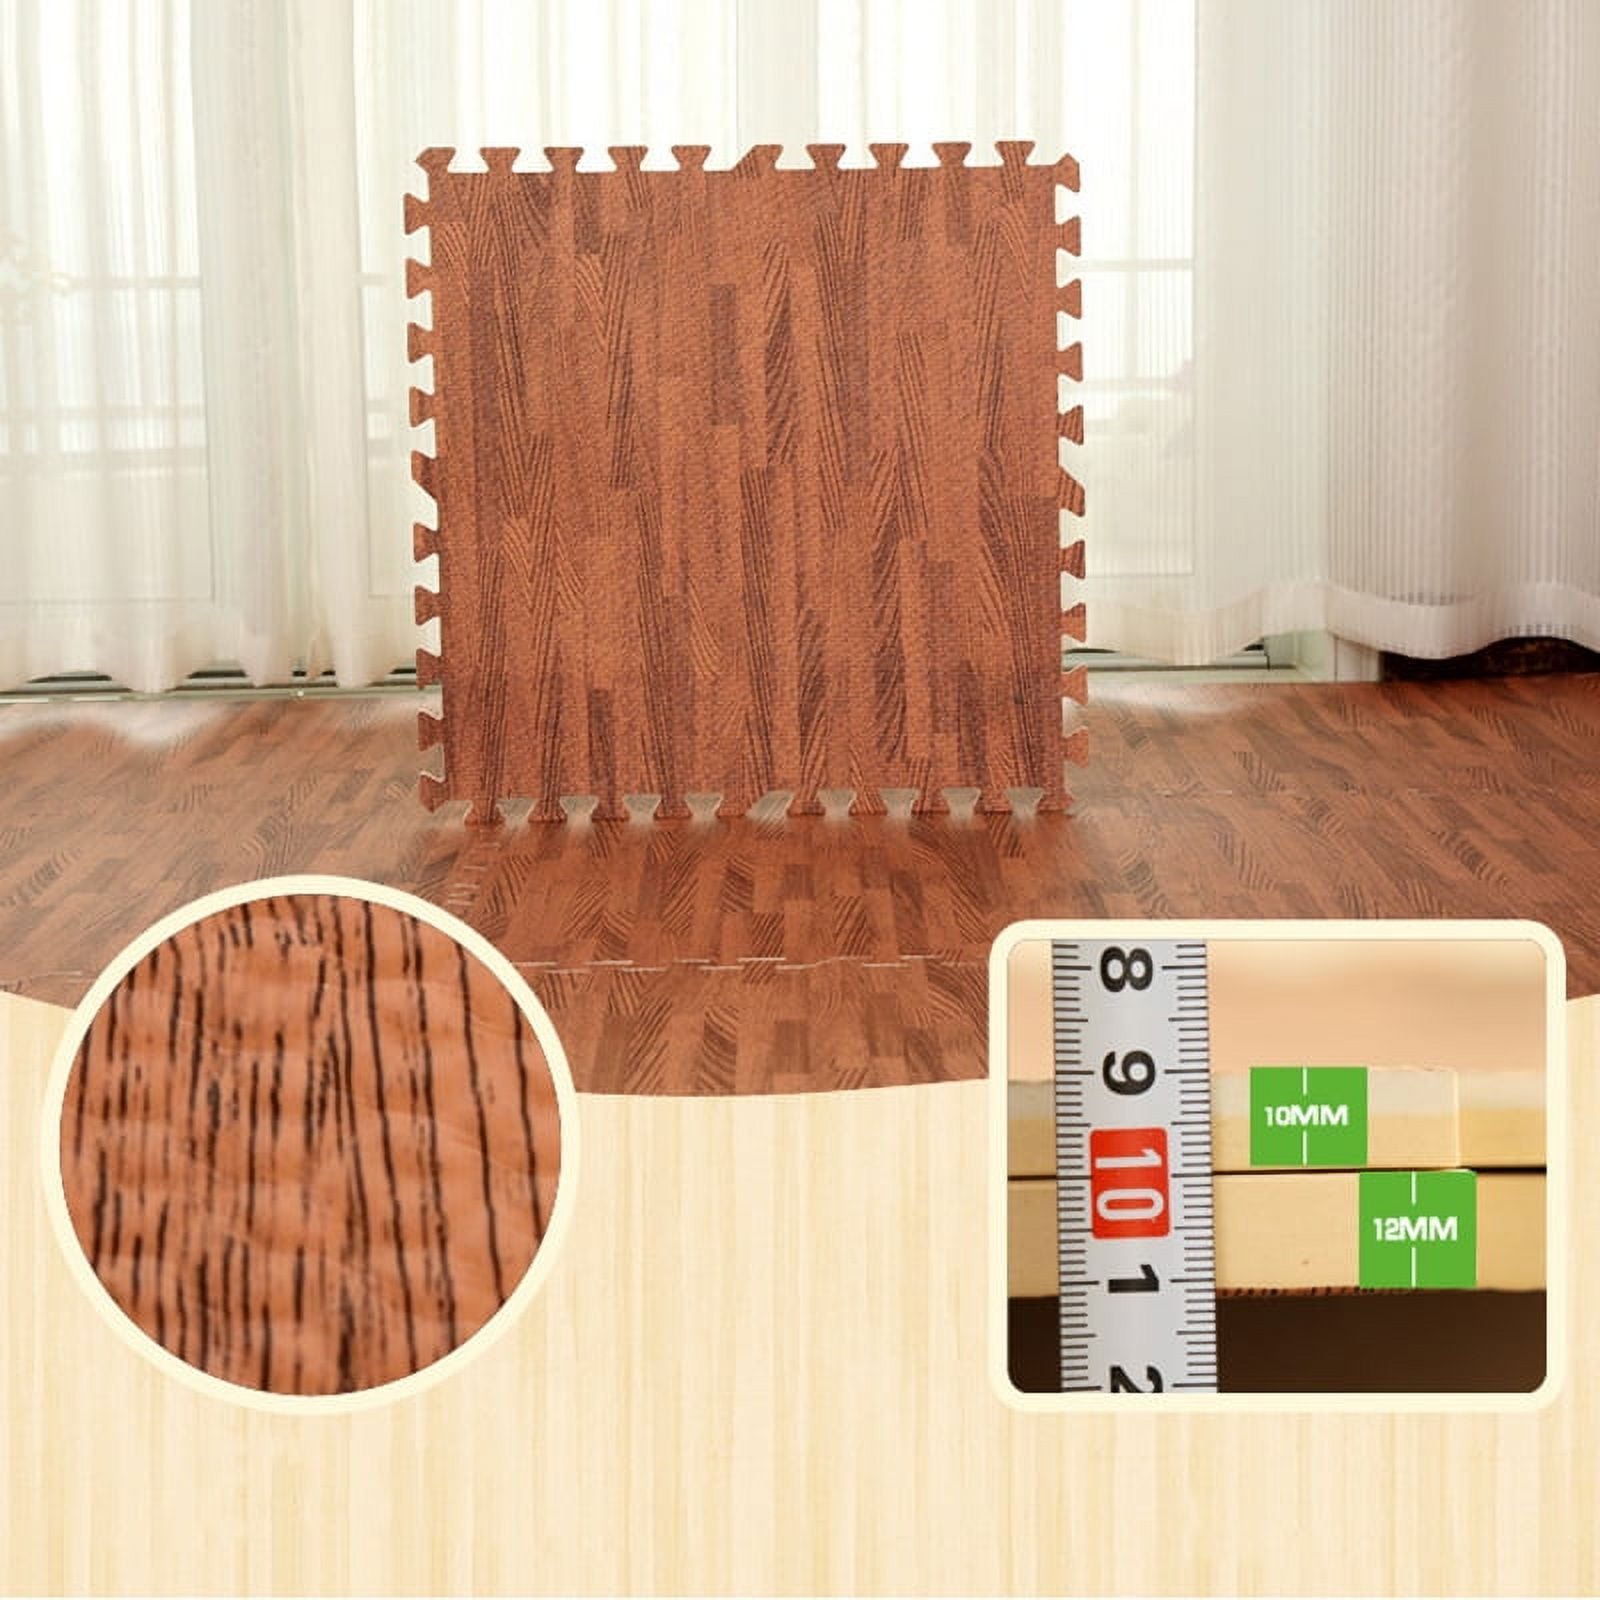 60*60cm Wooden Puzzle Mat Interlocking Foam Soft Floor Splicing